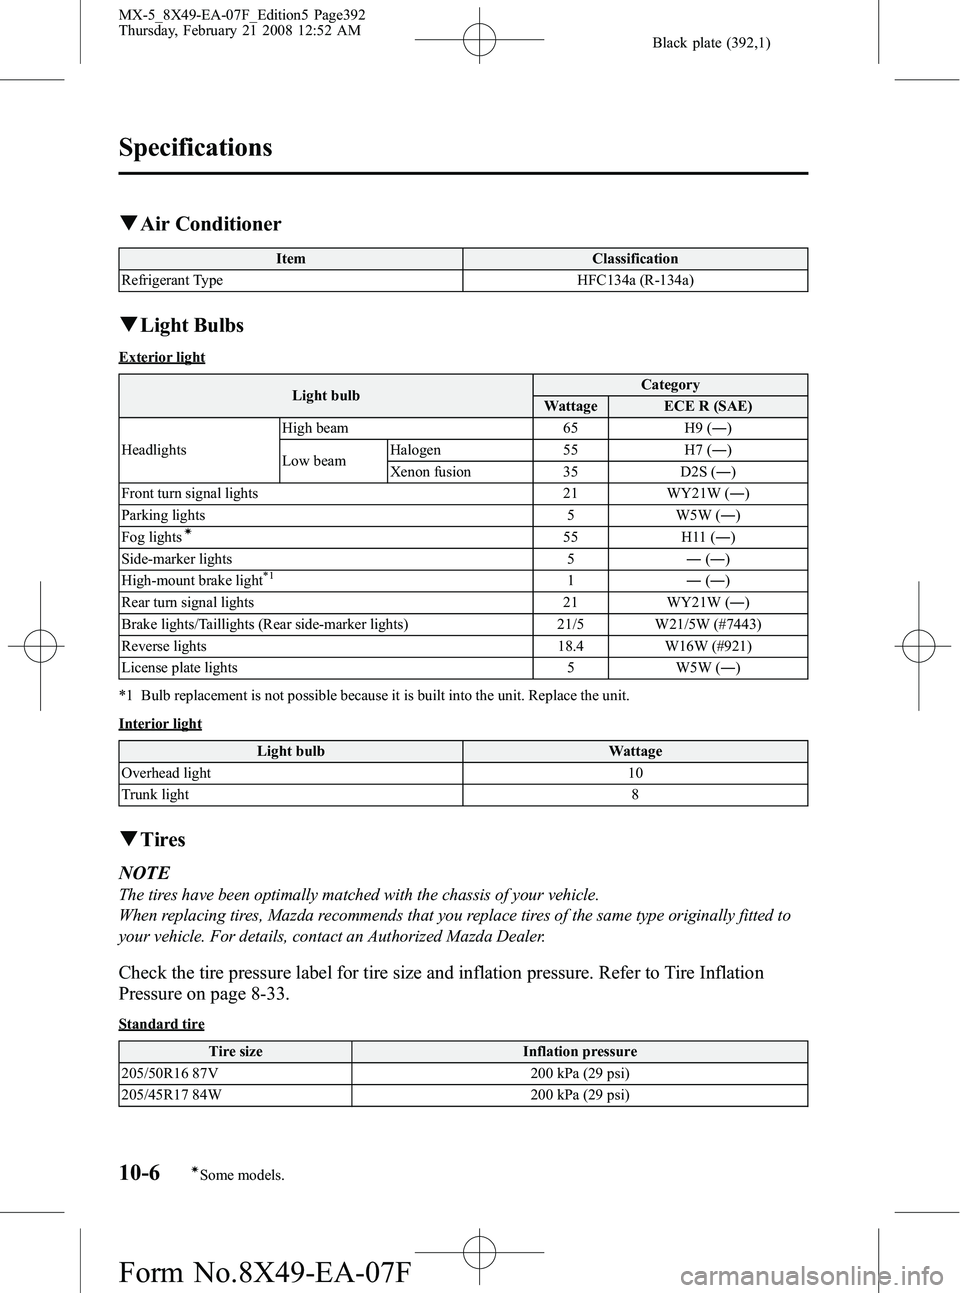 MAZDA MODEL MX-5 MIATA 2008  Owners Manual Black plate (392,1)
qAir Conditioner
Item Classification
Refrigerant Type HFC134a (R-134a)
qLight Bulbs
Exterior light
Light bulb Category
Wattage ECE R (SAE)
Headlights High beam 65 H9 (
―)
Low bea